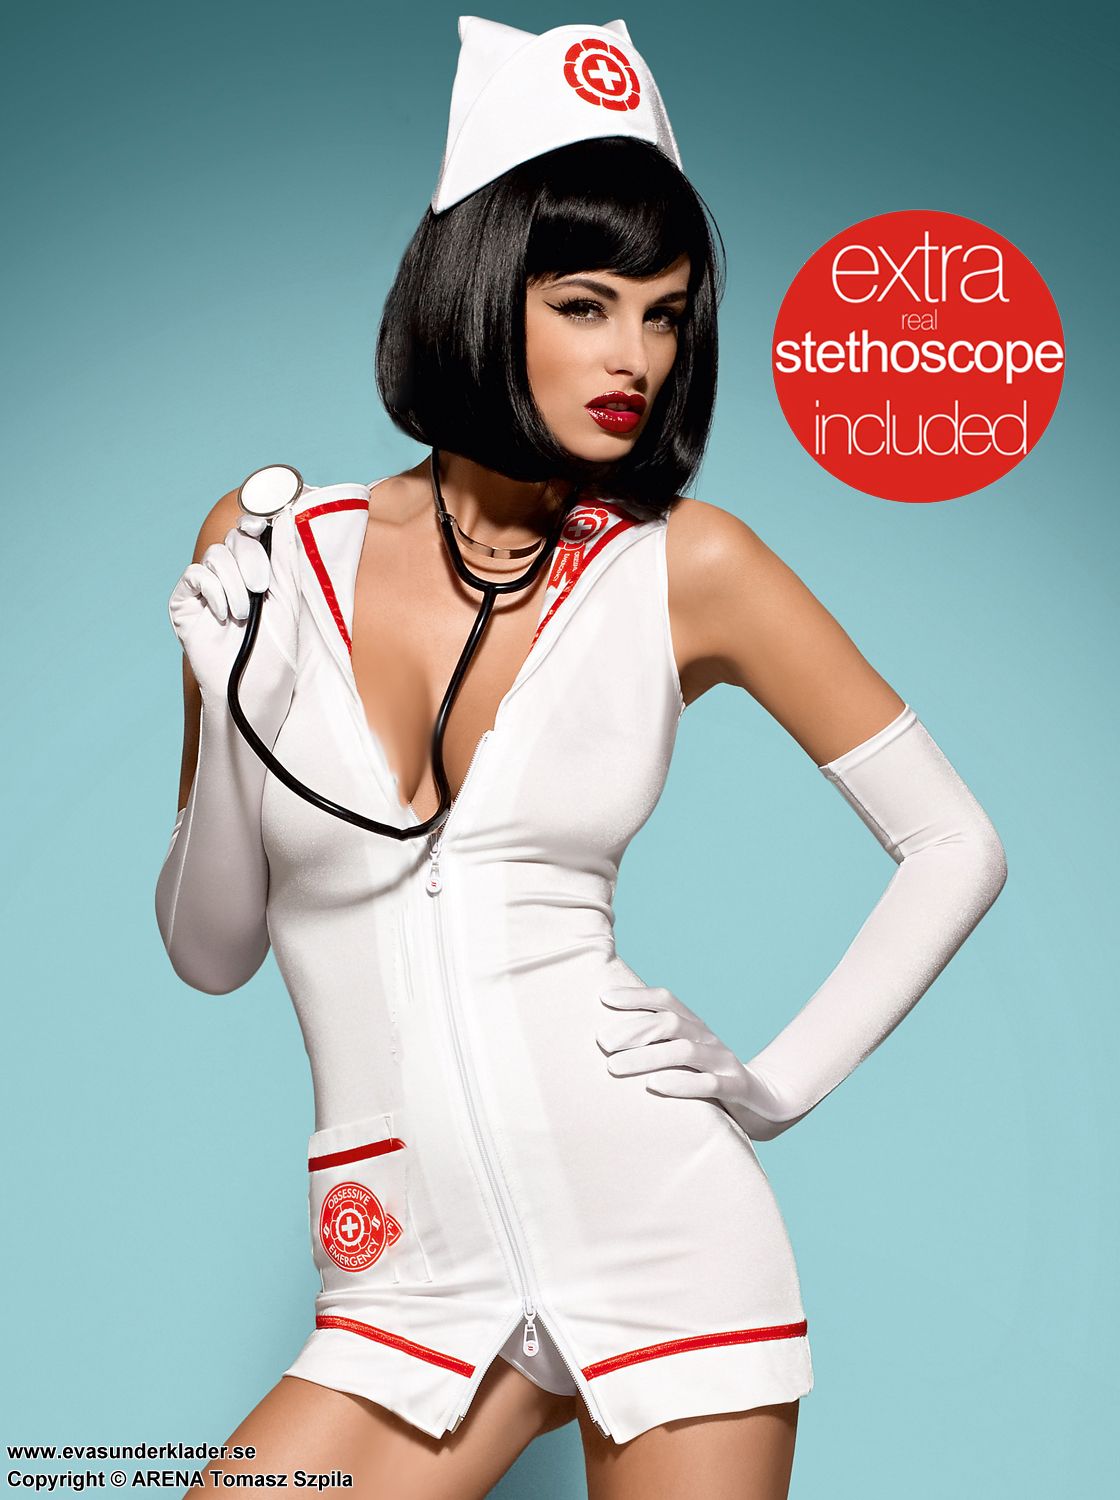 Emergency room nurse costume and stethoscope.